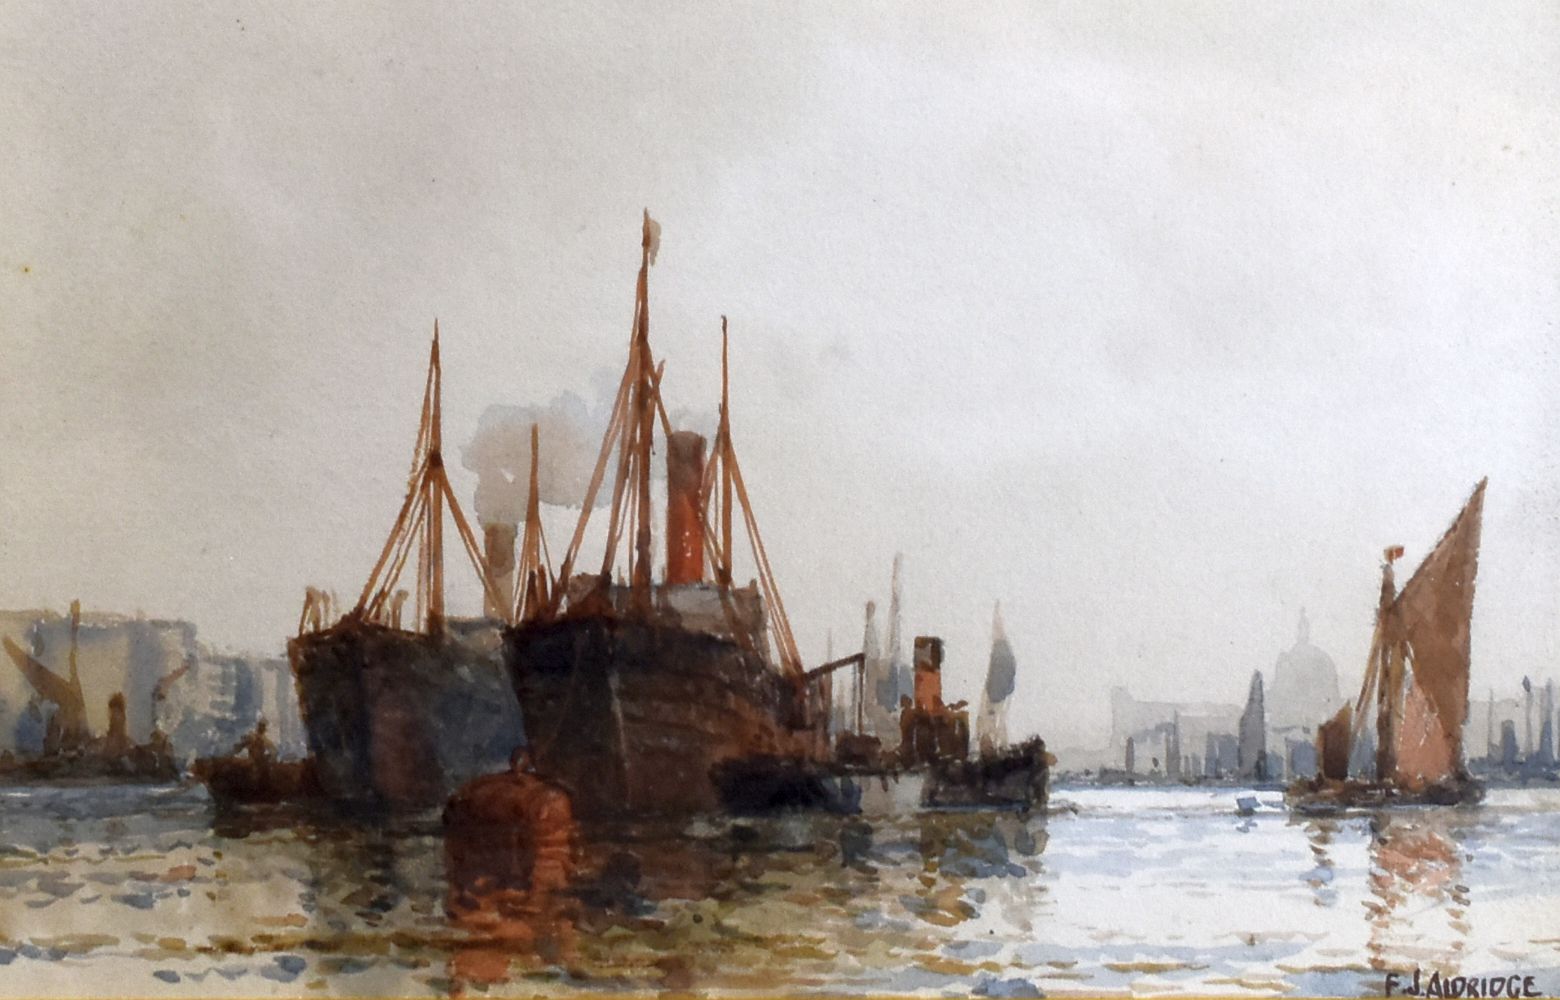 F J ALDRIDGE watercolour - London shipping scene